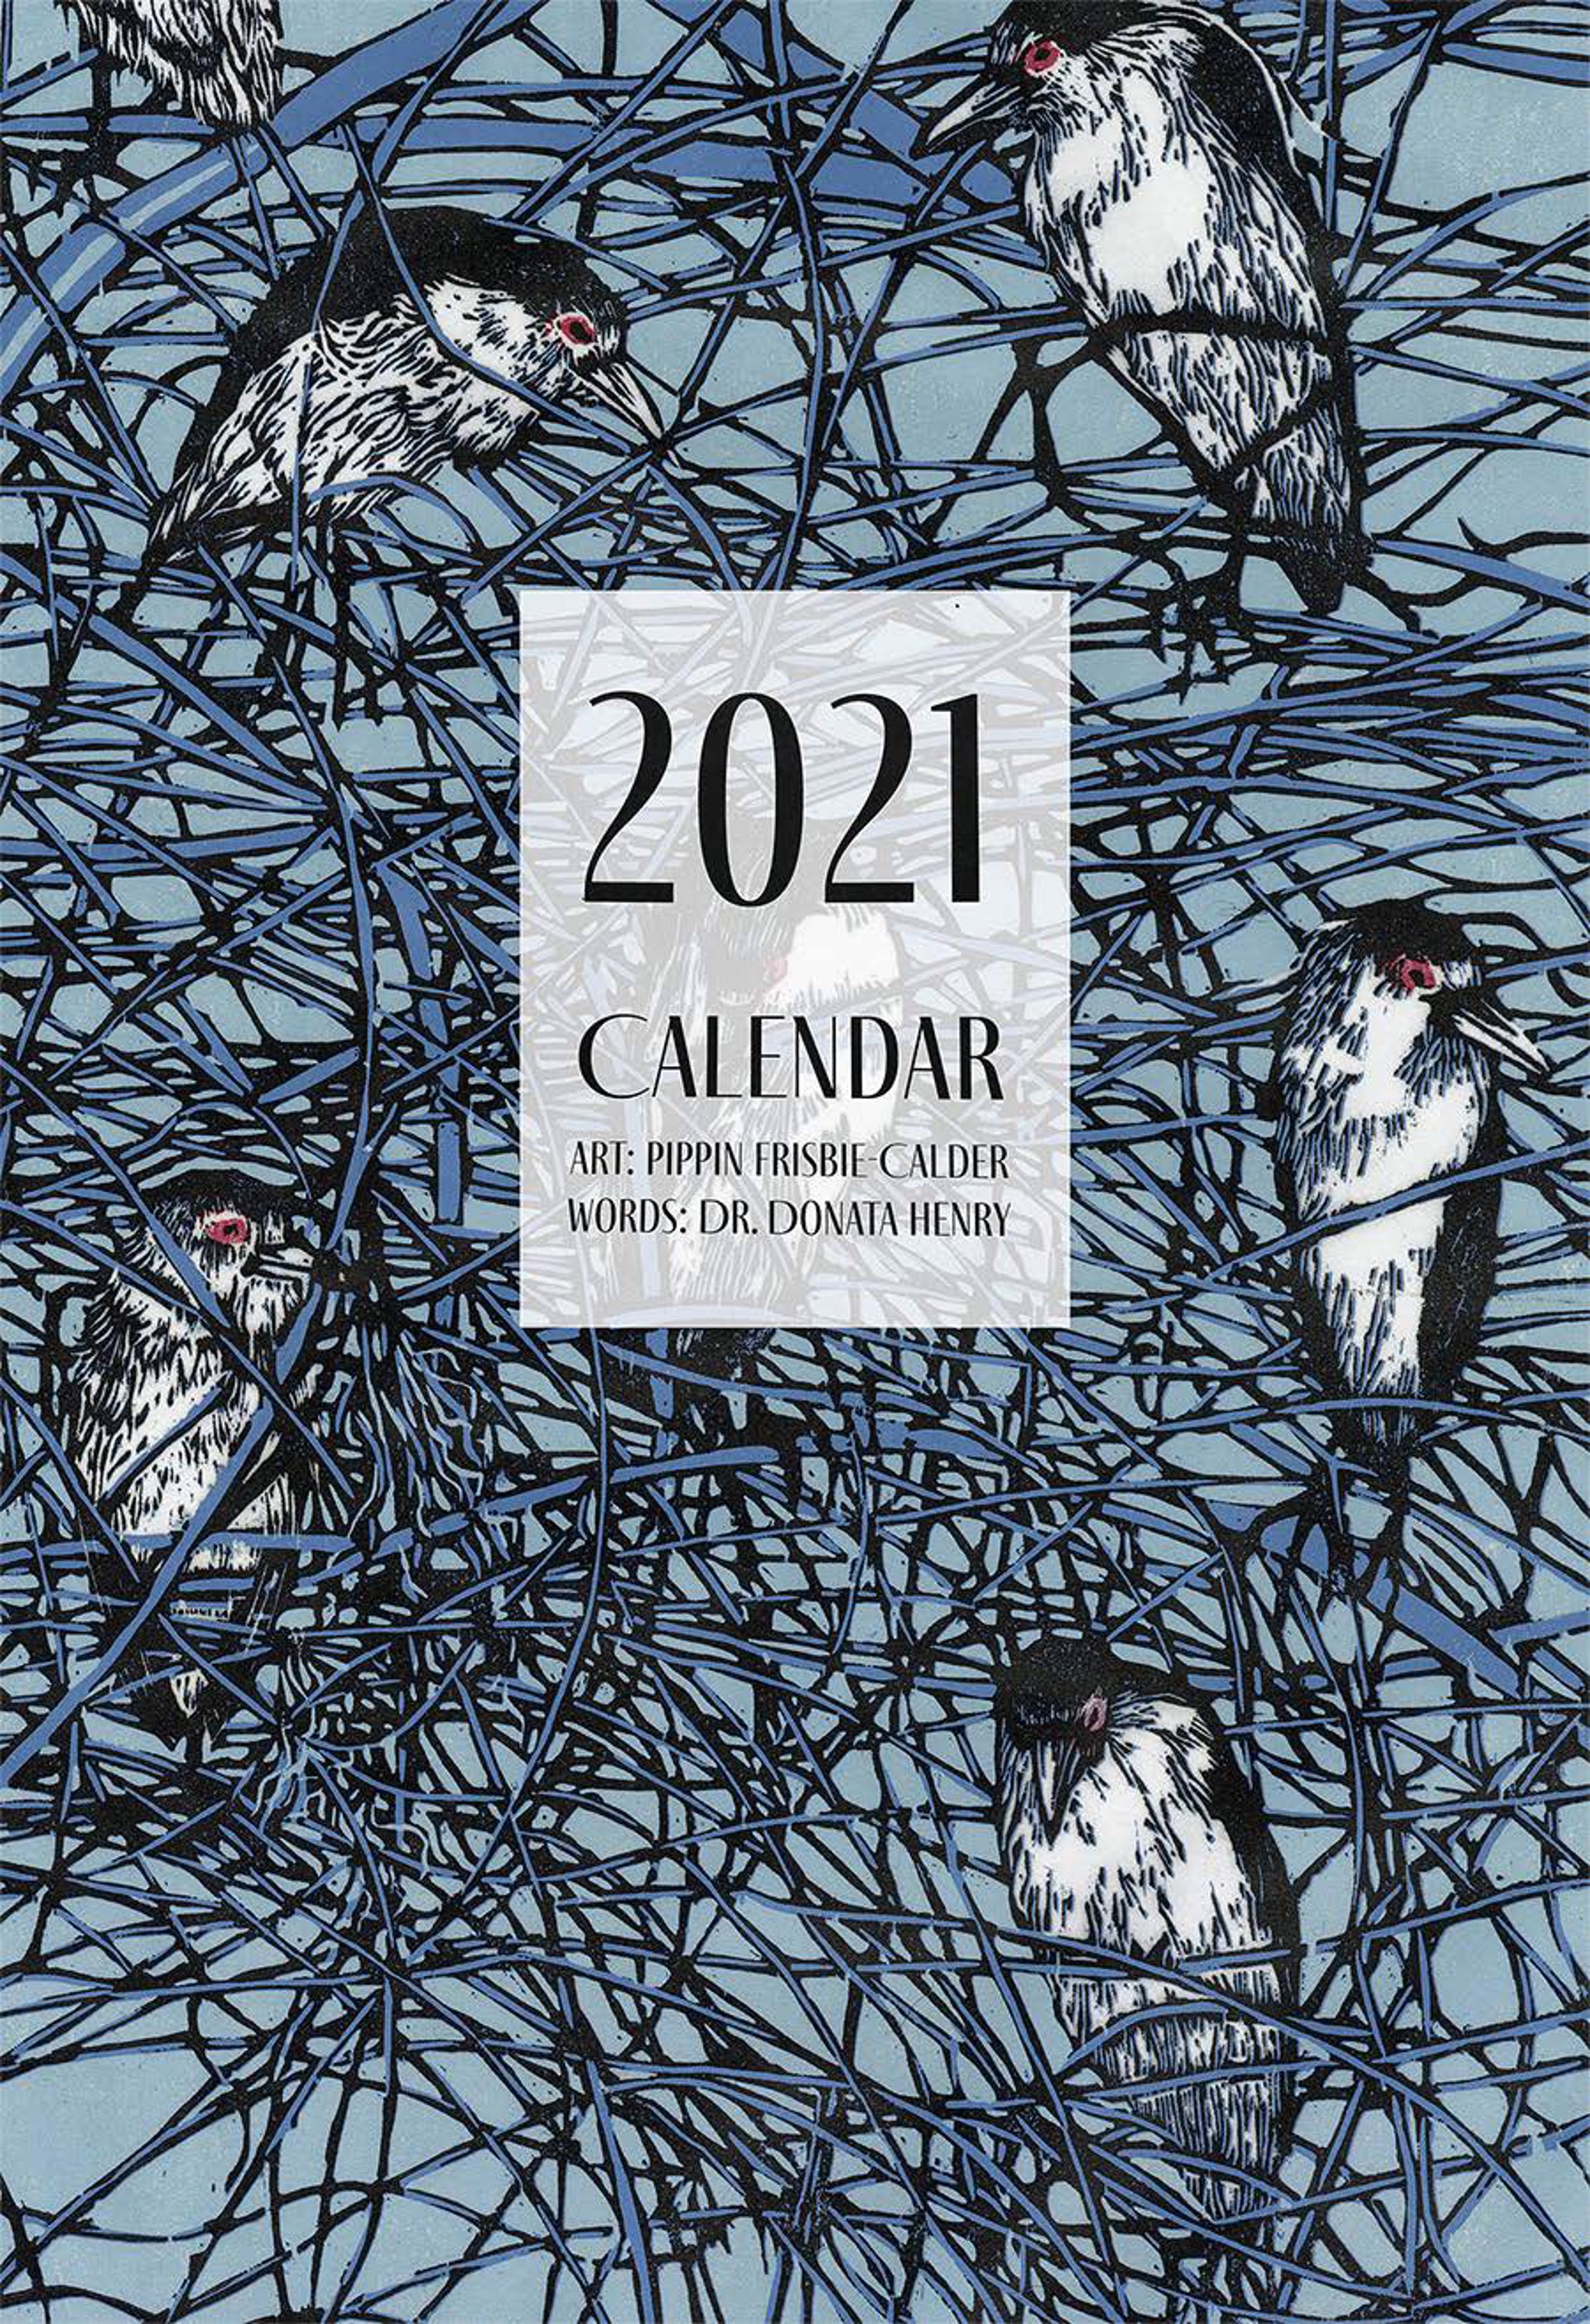 Pippin Frisbie Calder 2021 Calendar by Pippin Frisbie-Calder